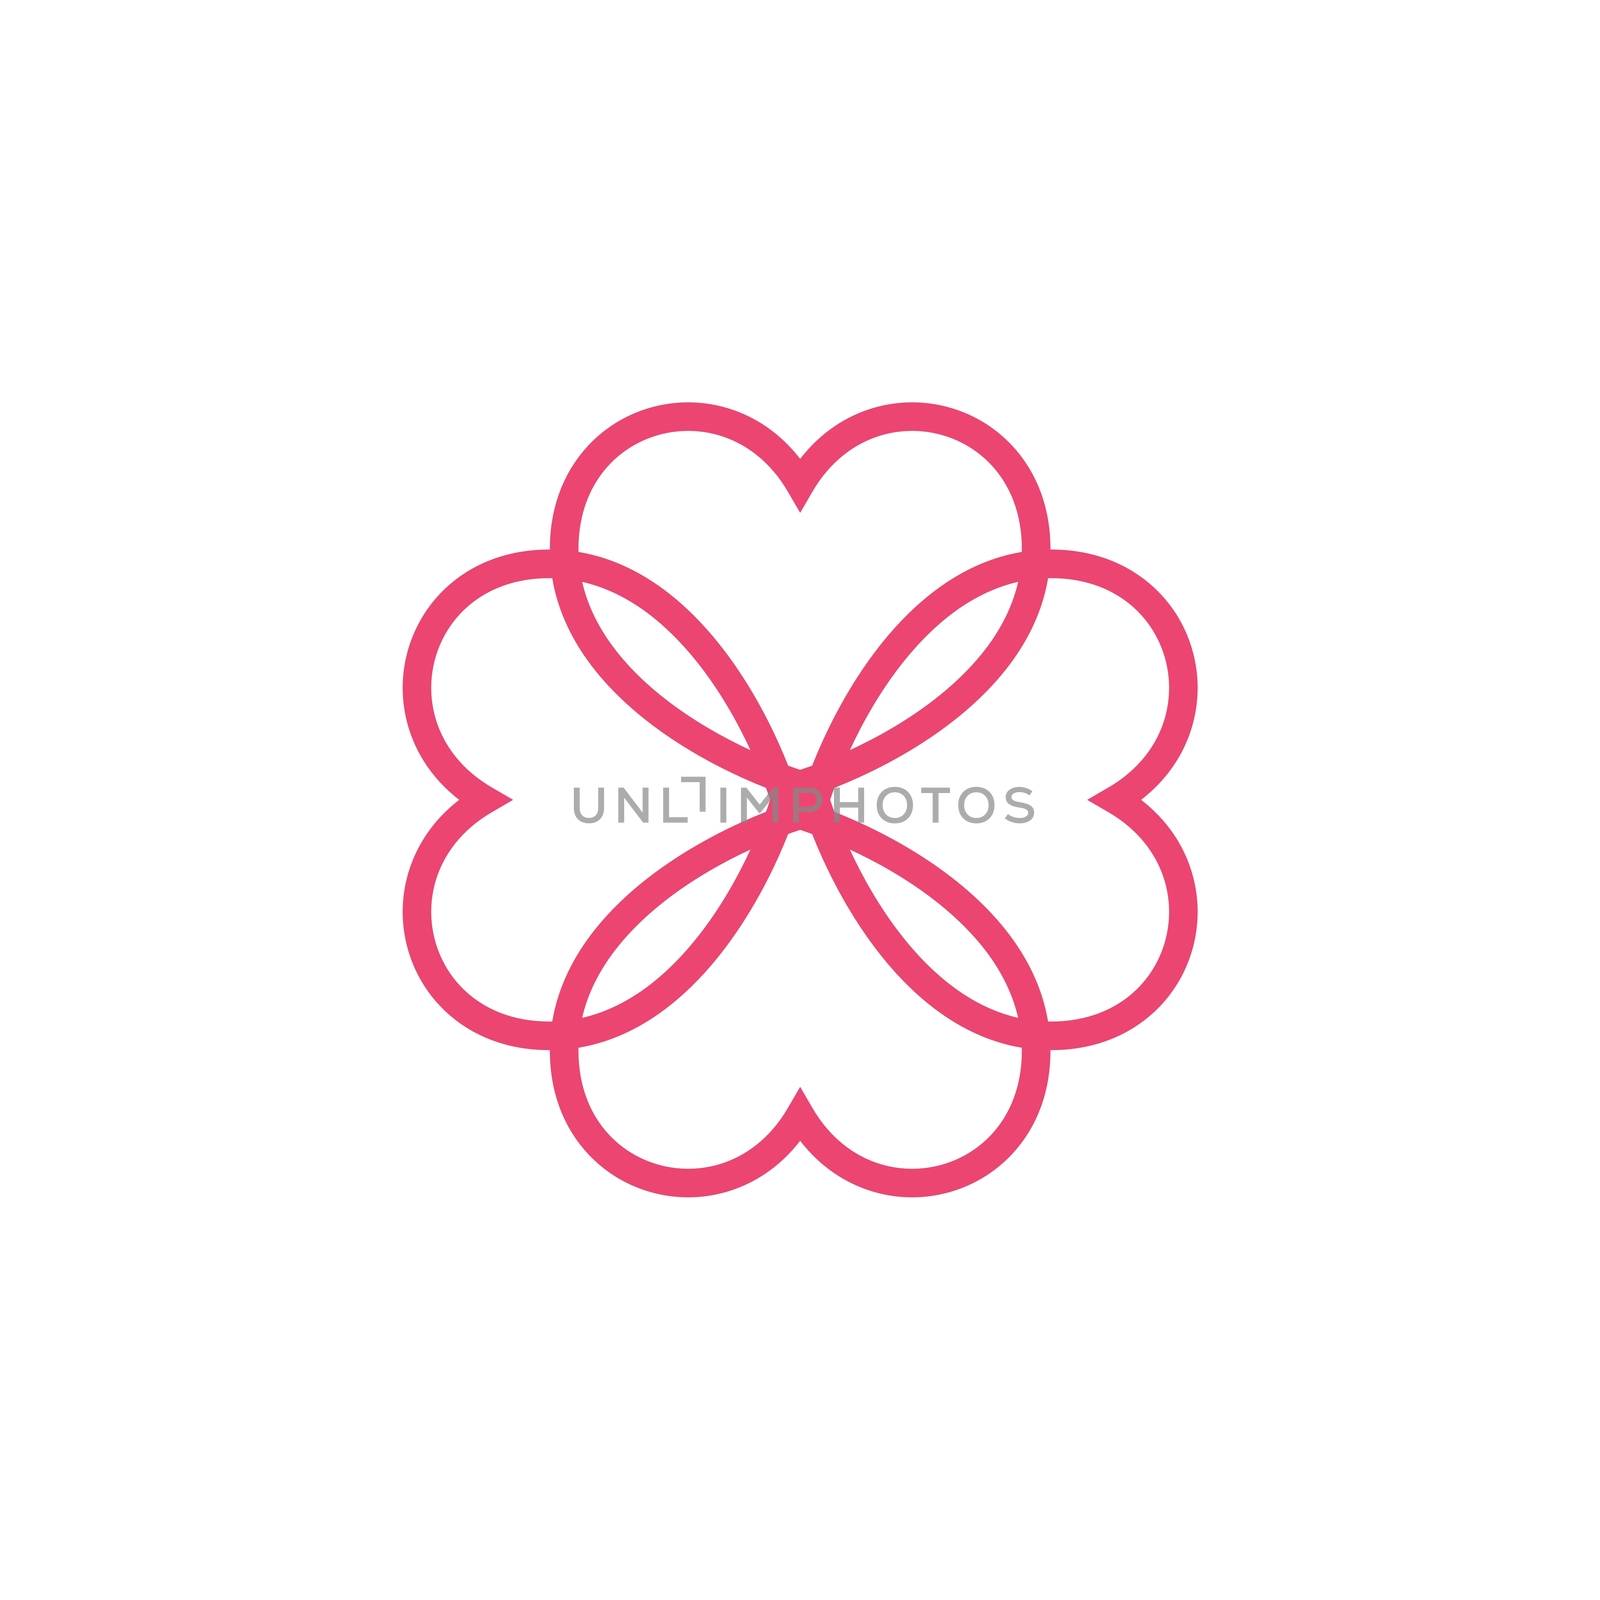 Love Heart Engaged Logo Template Illustration Design Illustration Design. Vector EPS 10.